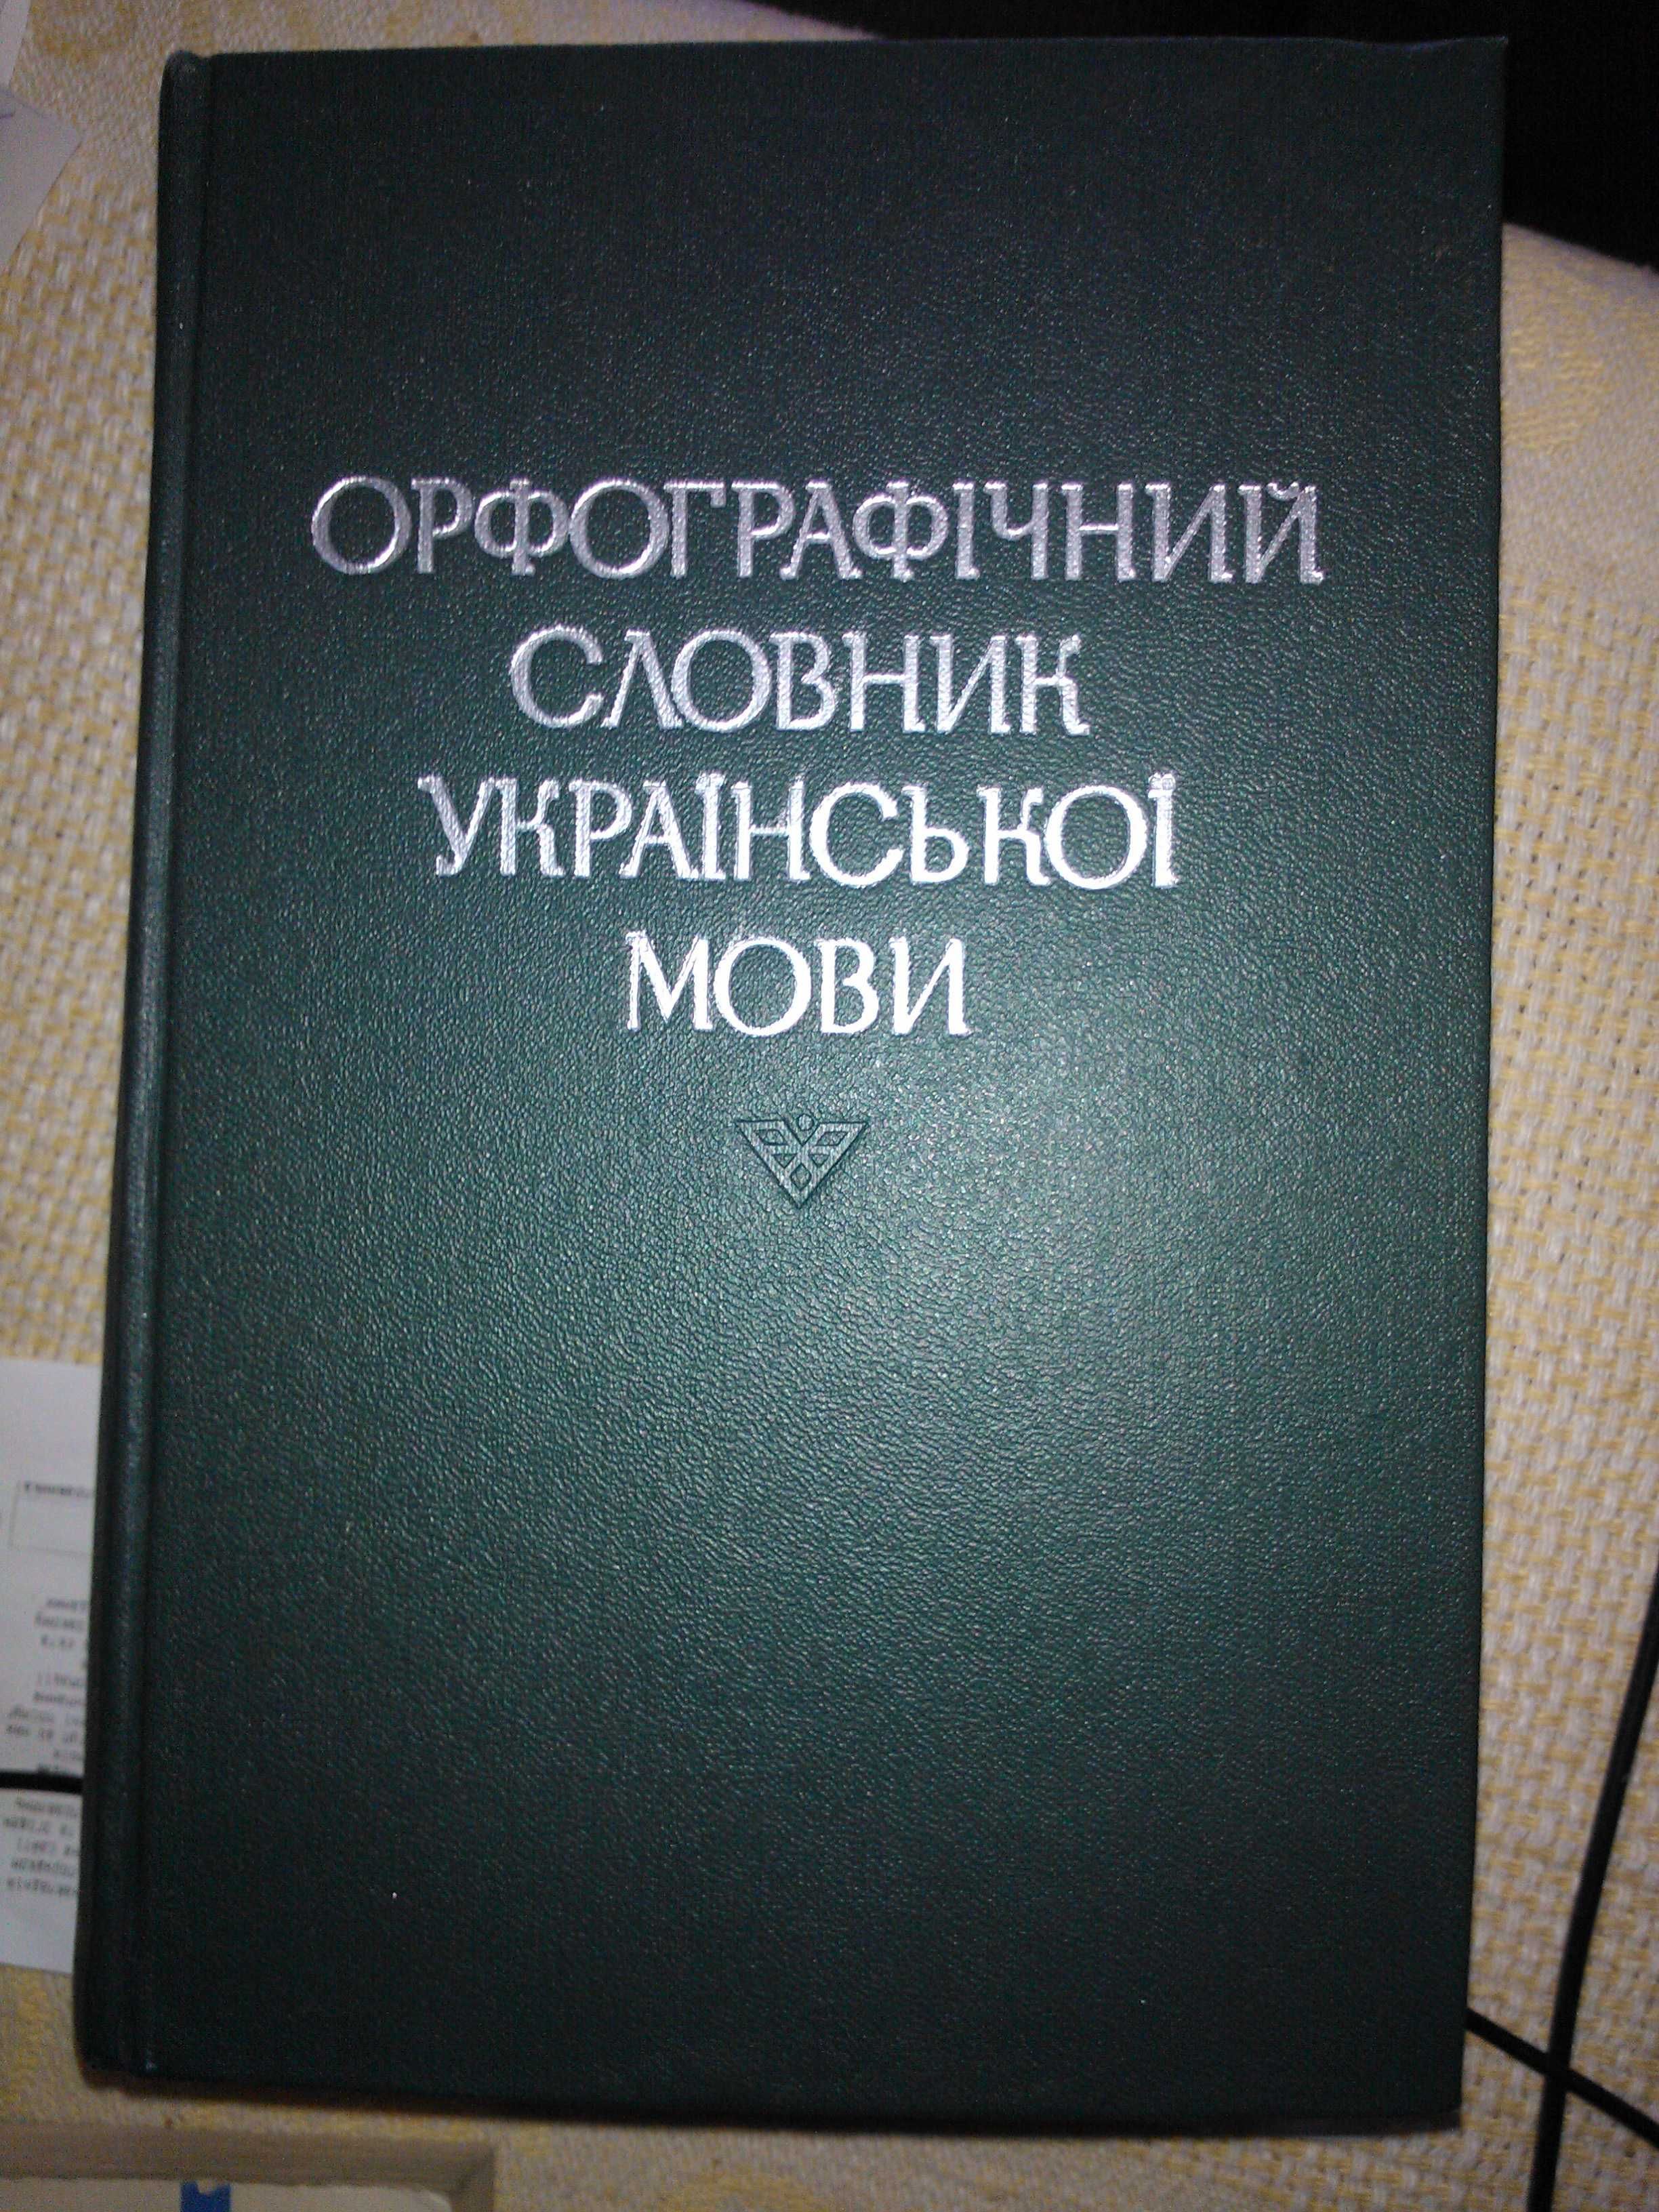 Орфографiчний словник украiнськоi мови ( 114 000 слiв).